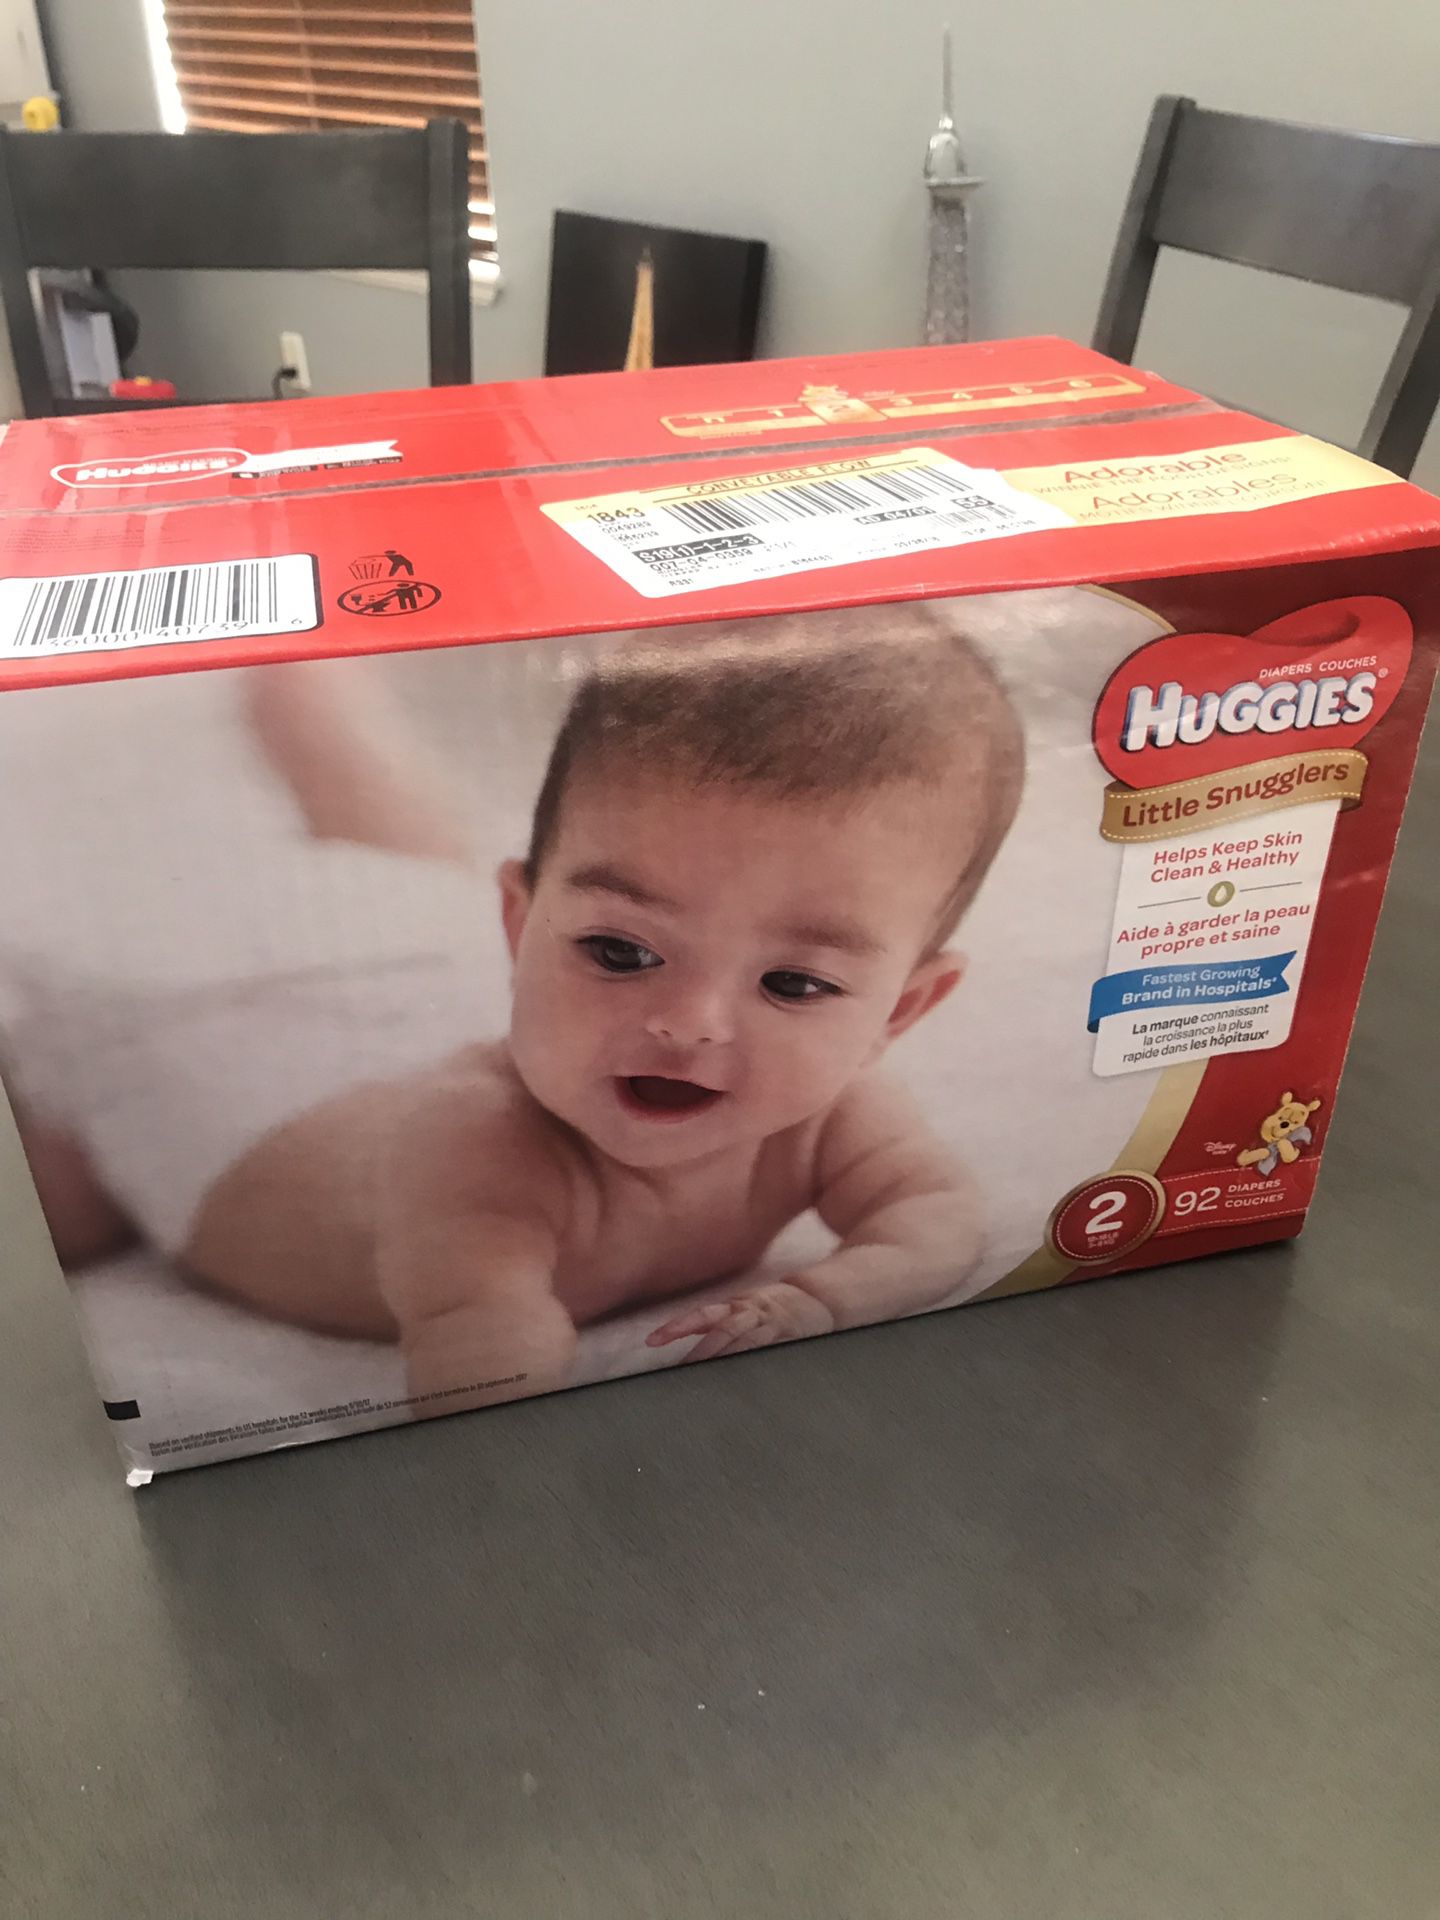 Huggies size 2 diapers